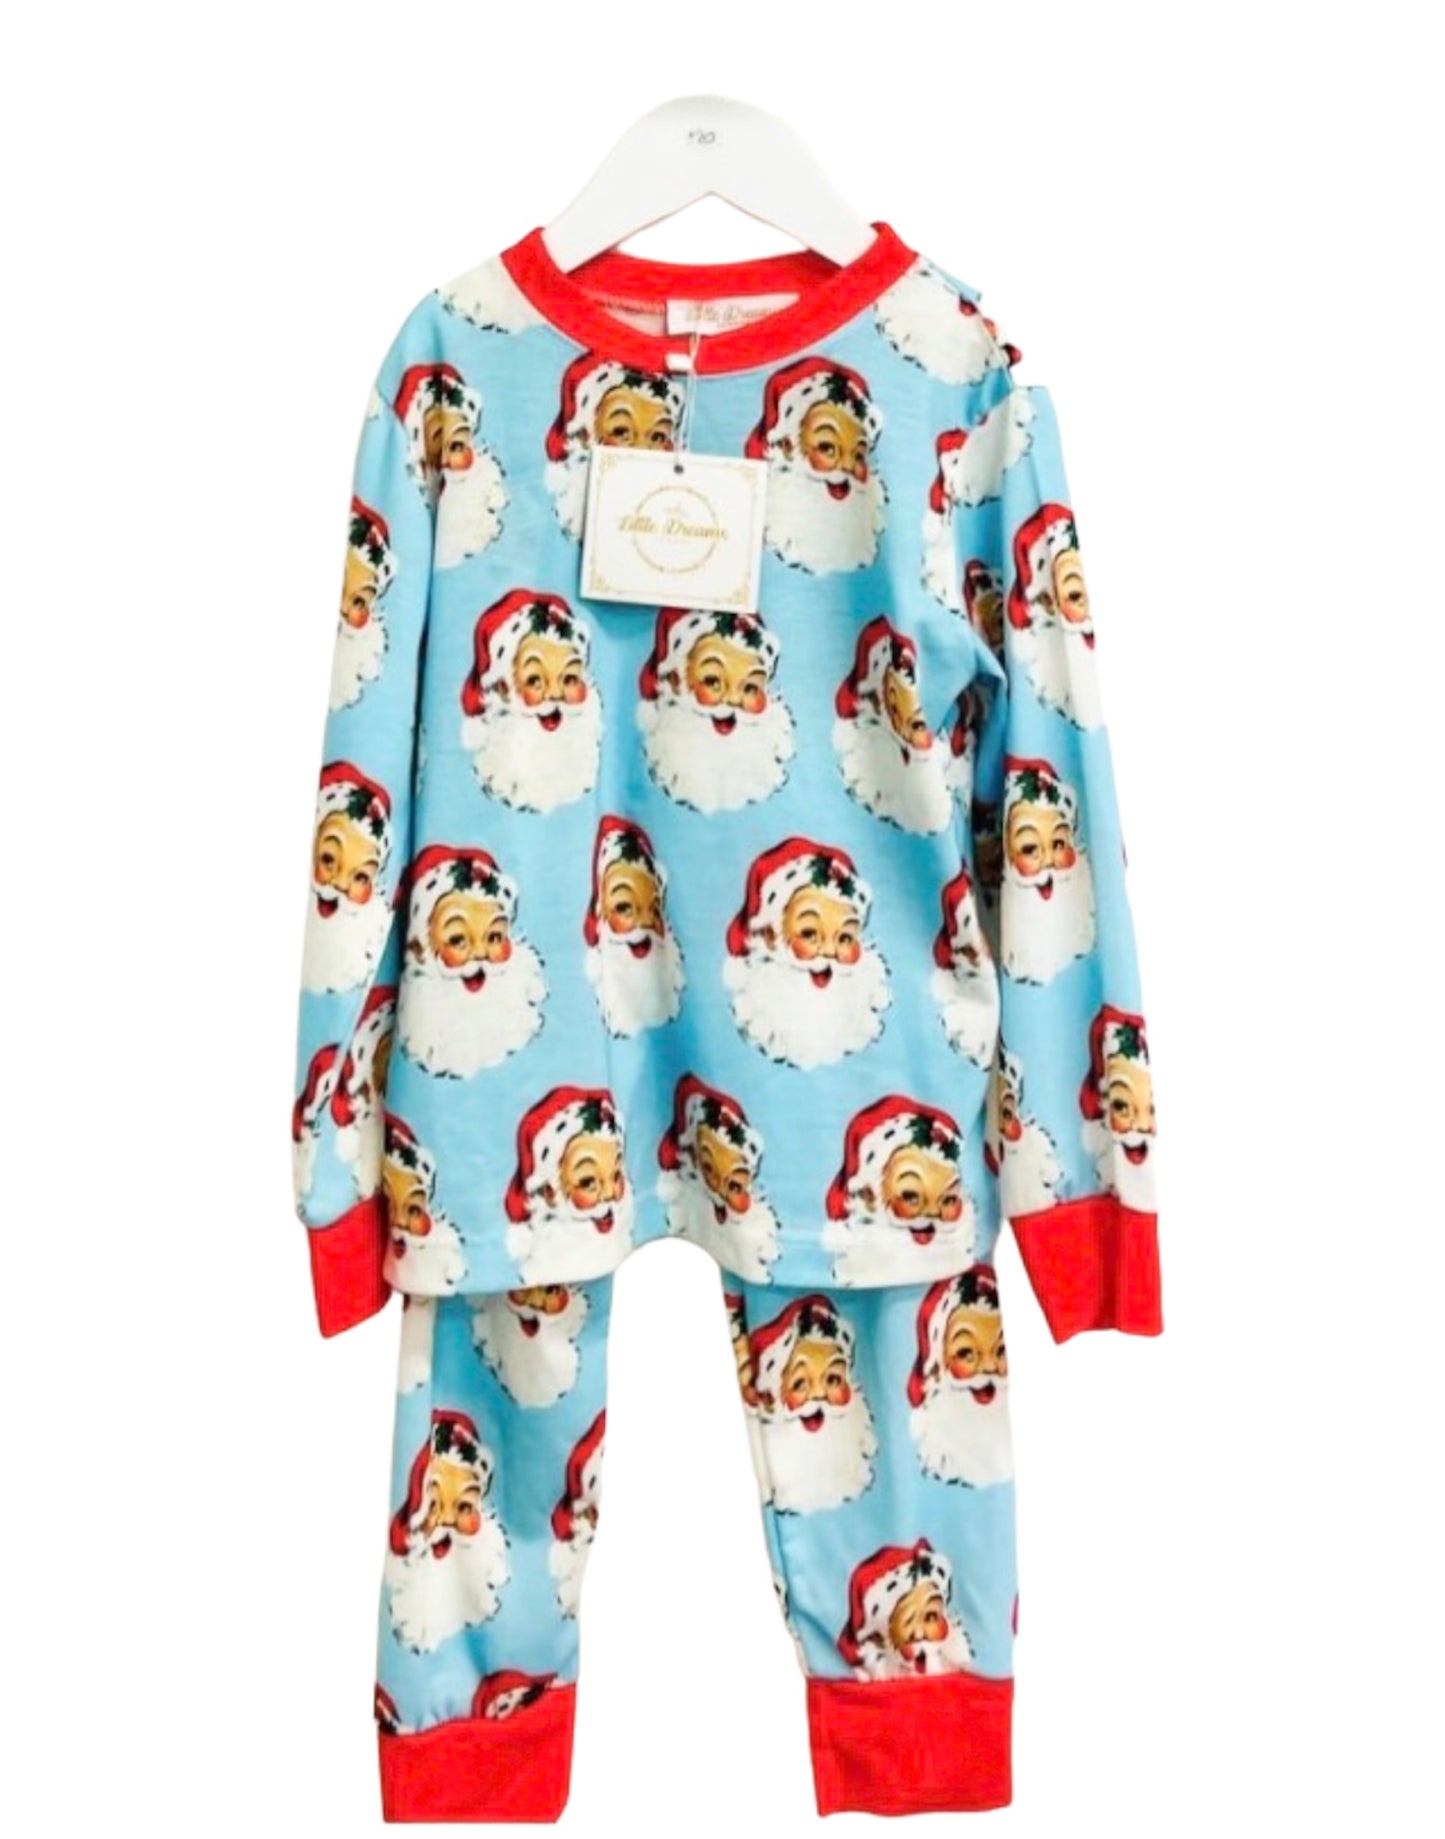 Father Christmas pyjamas